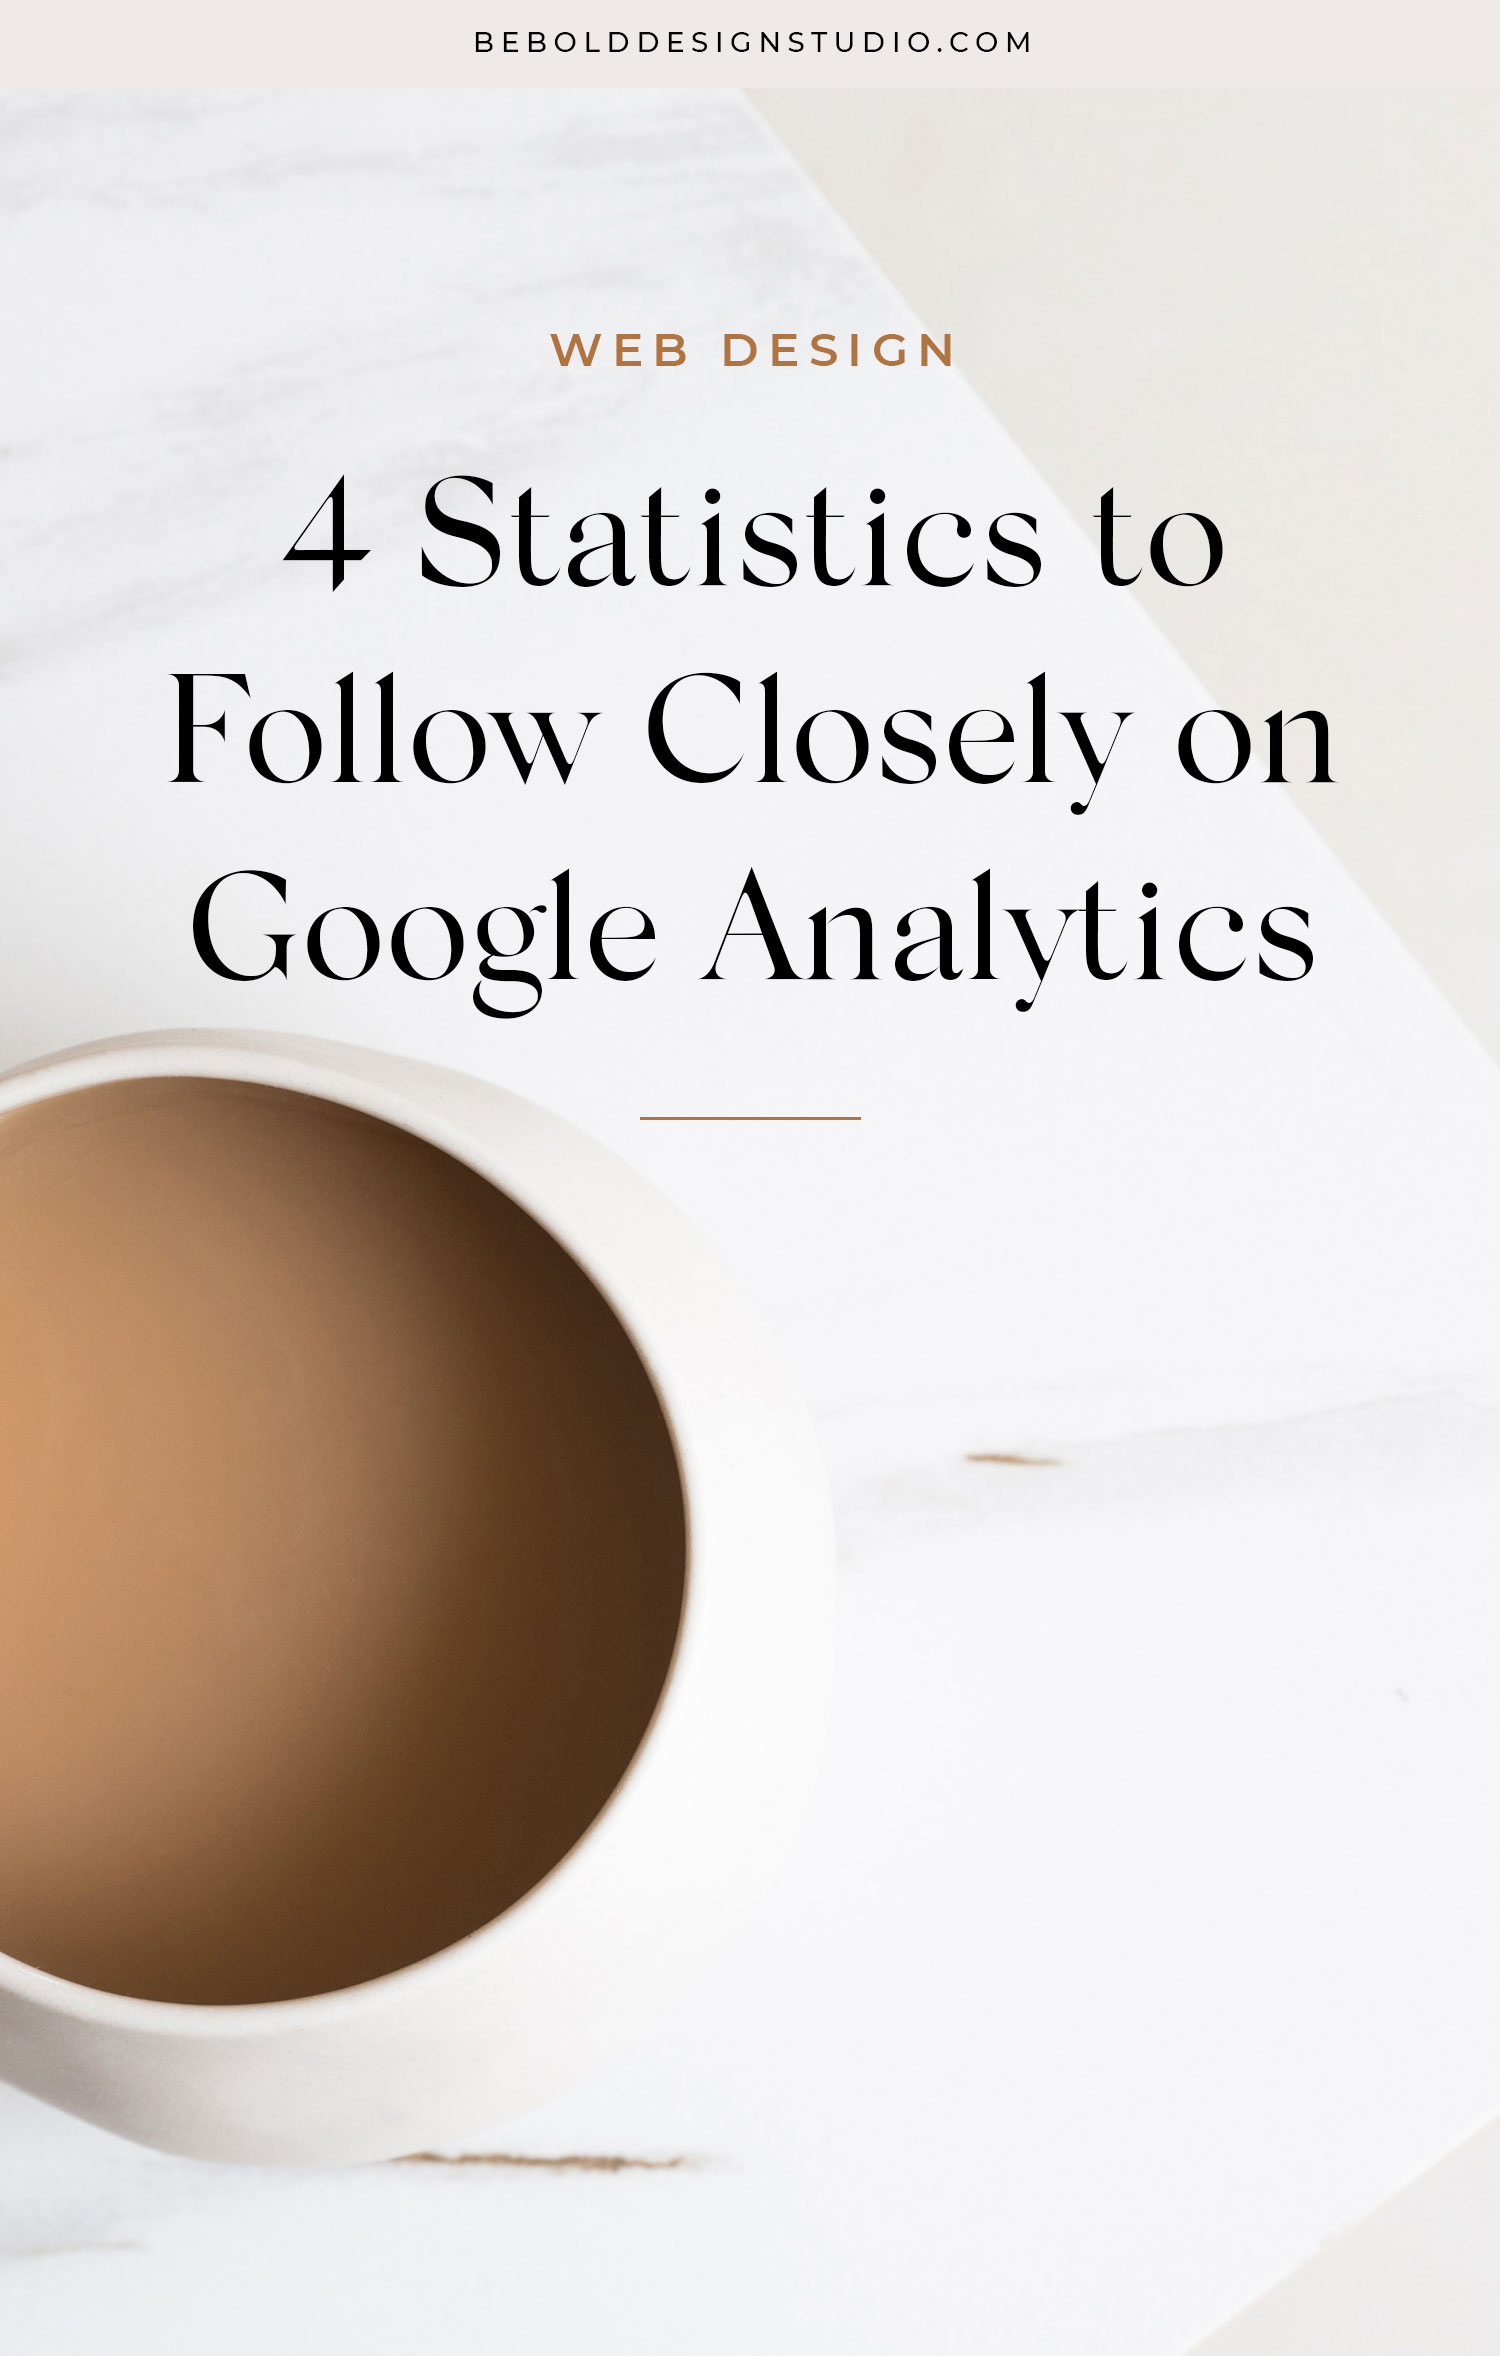 4 Statistics to Follow Closely on Google Analytics